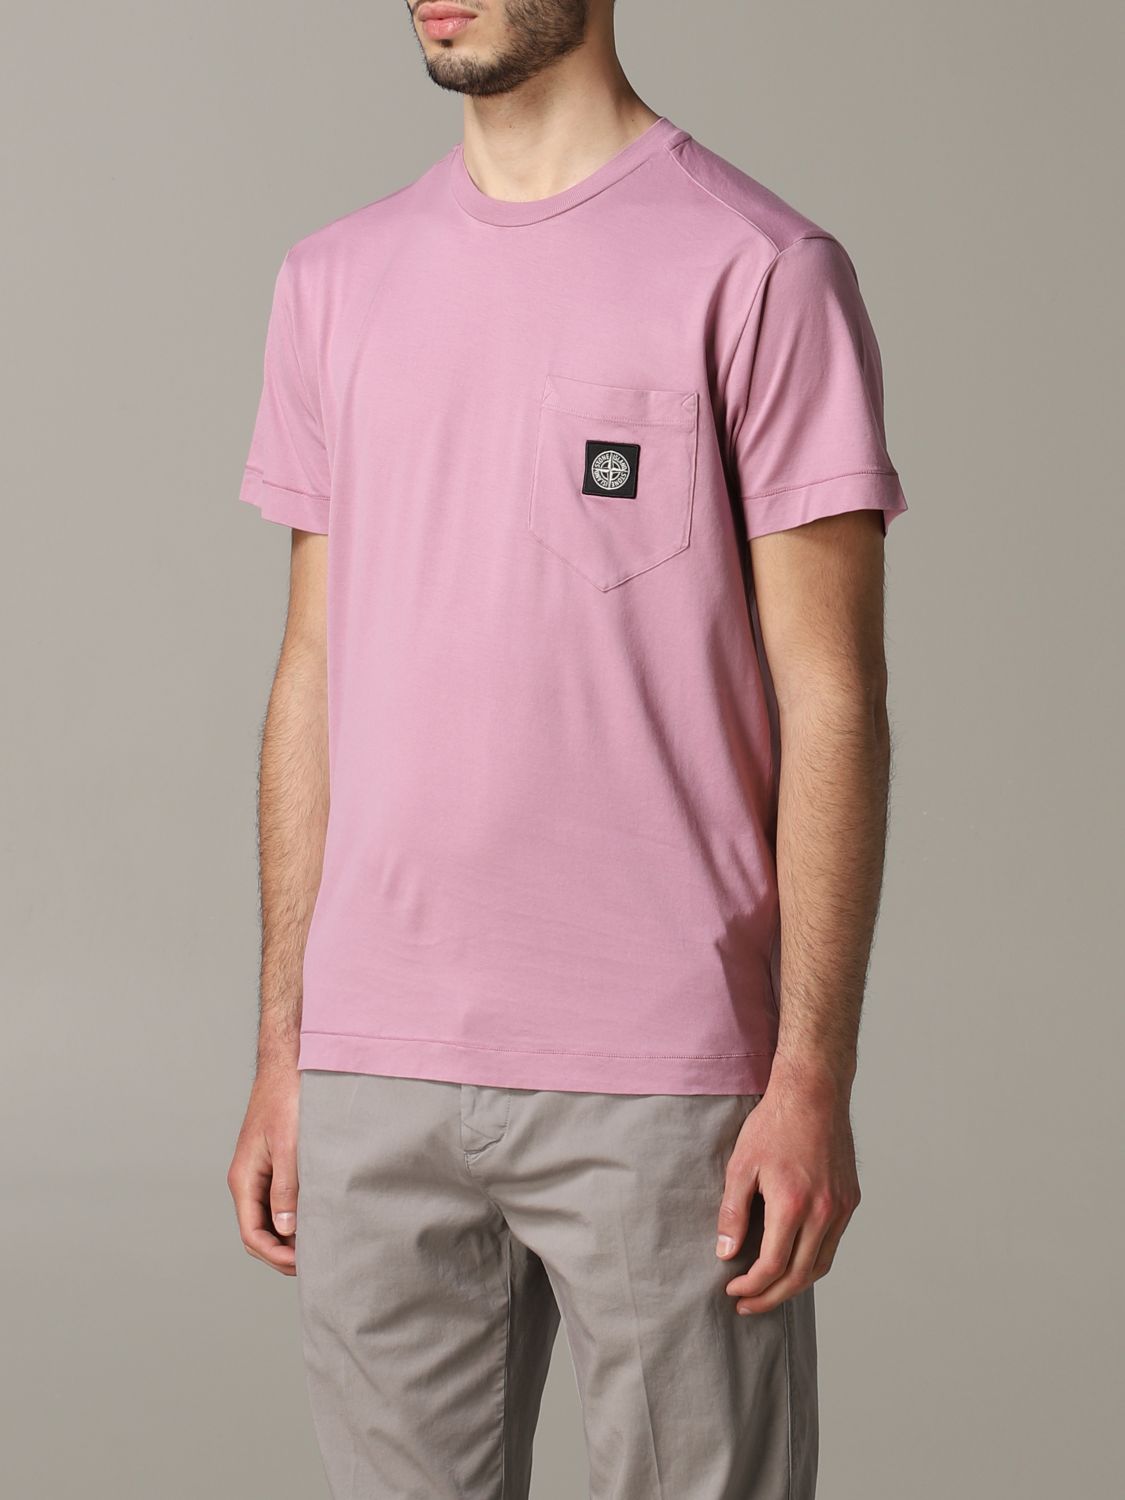 STONE ISLAND: T-shirt men | T-Shirt Stone Island Men Pink | T-Shirt ...